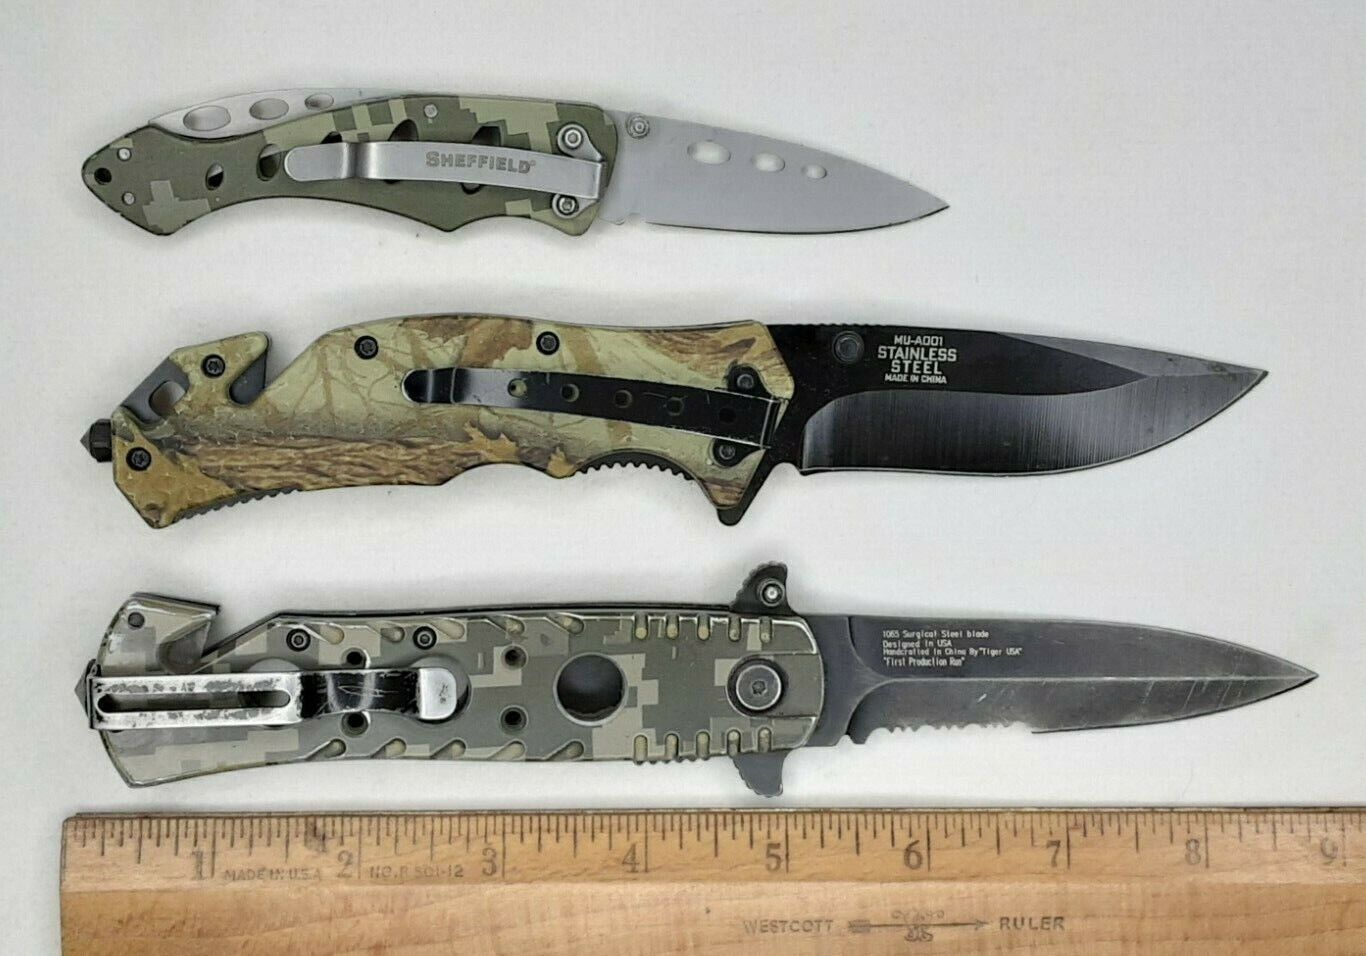 Set/Lot of 3 Camo Folding Survival/Tactile Knives.